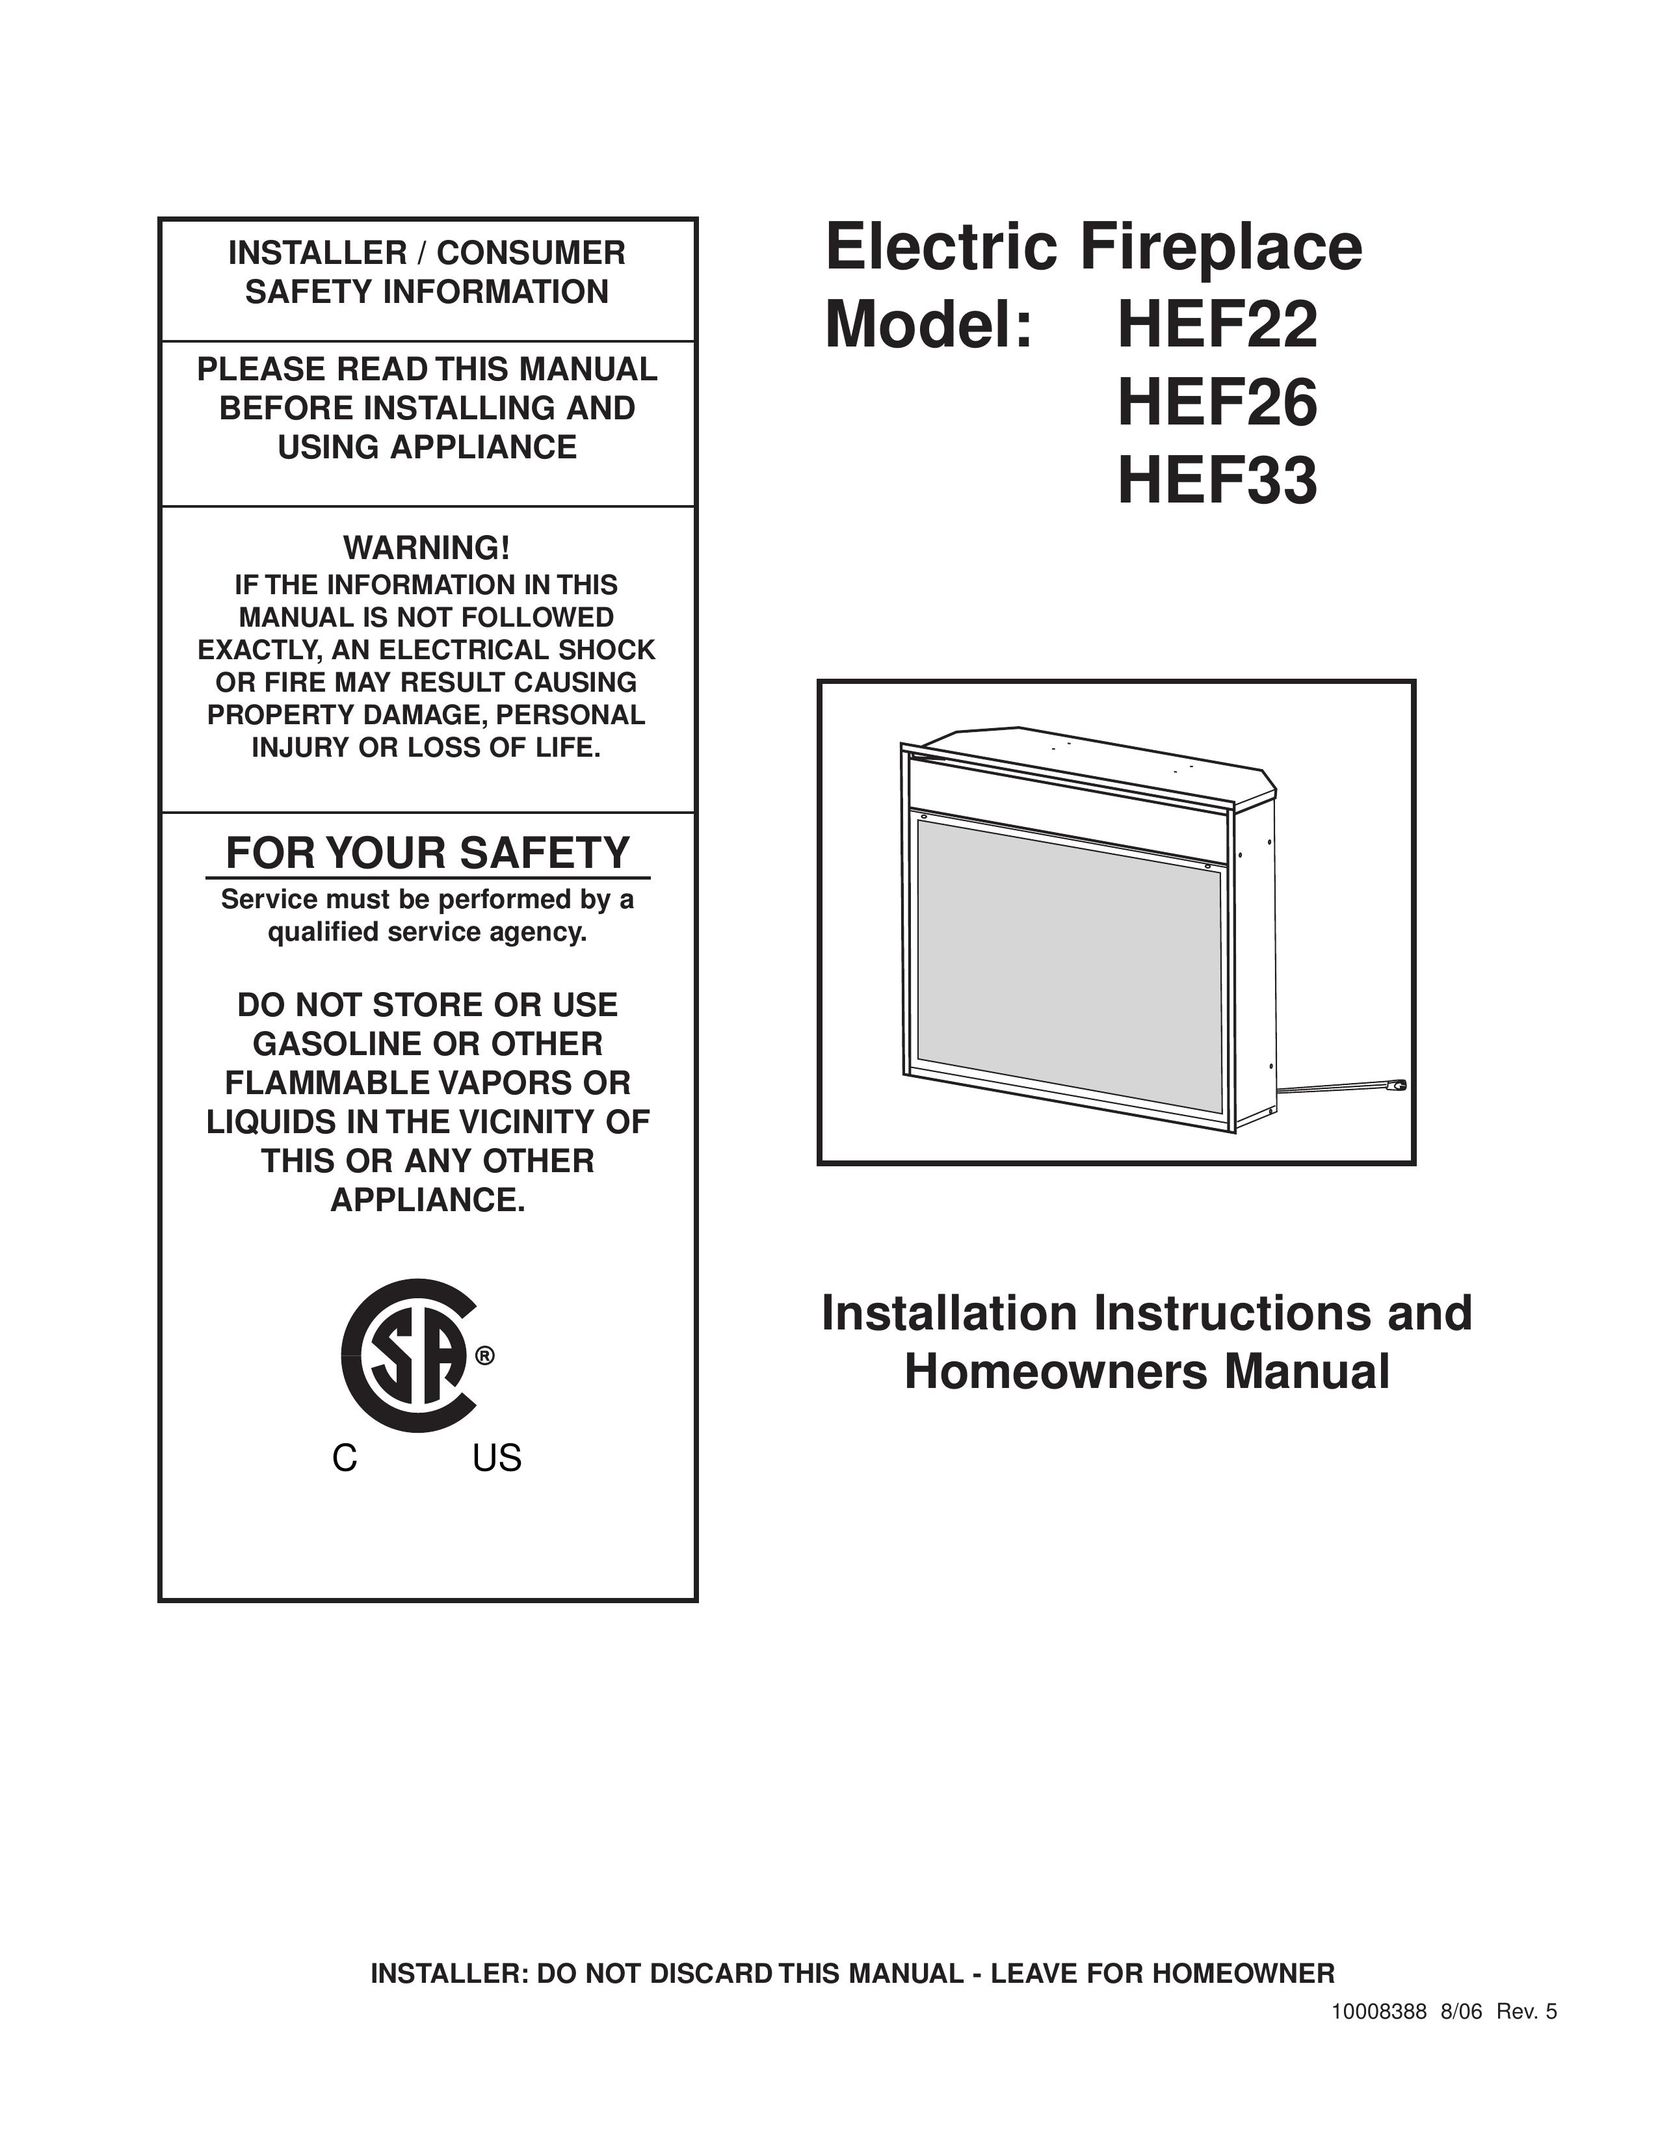 CFM Corporation HEF33 Indoor Fireplace User Manual